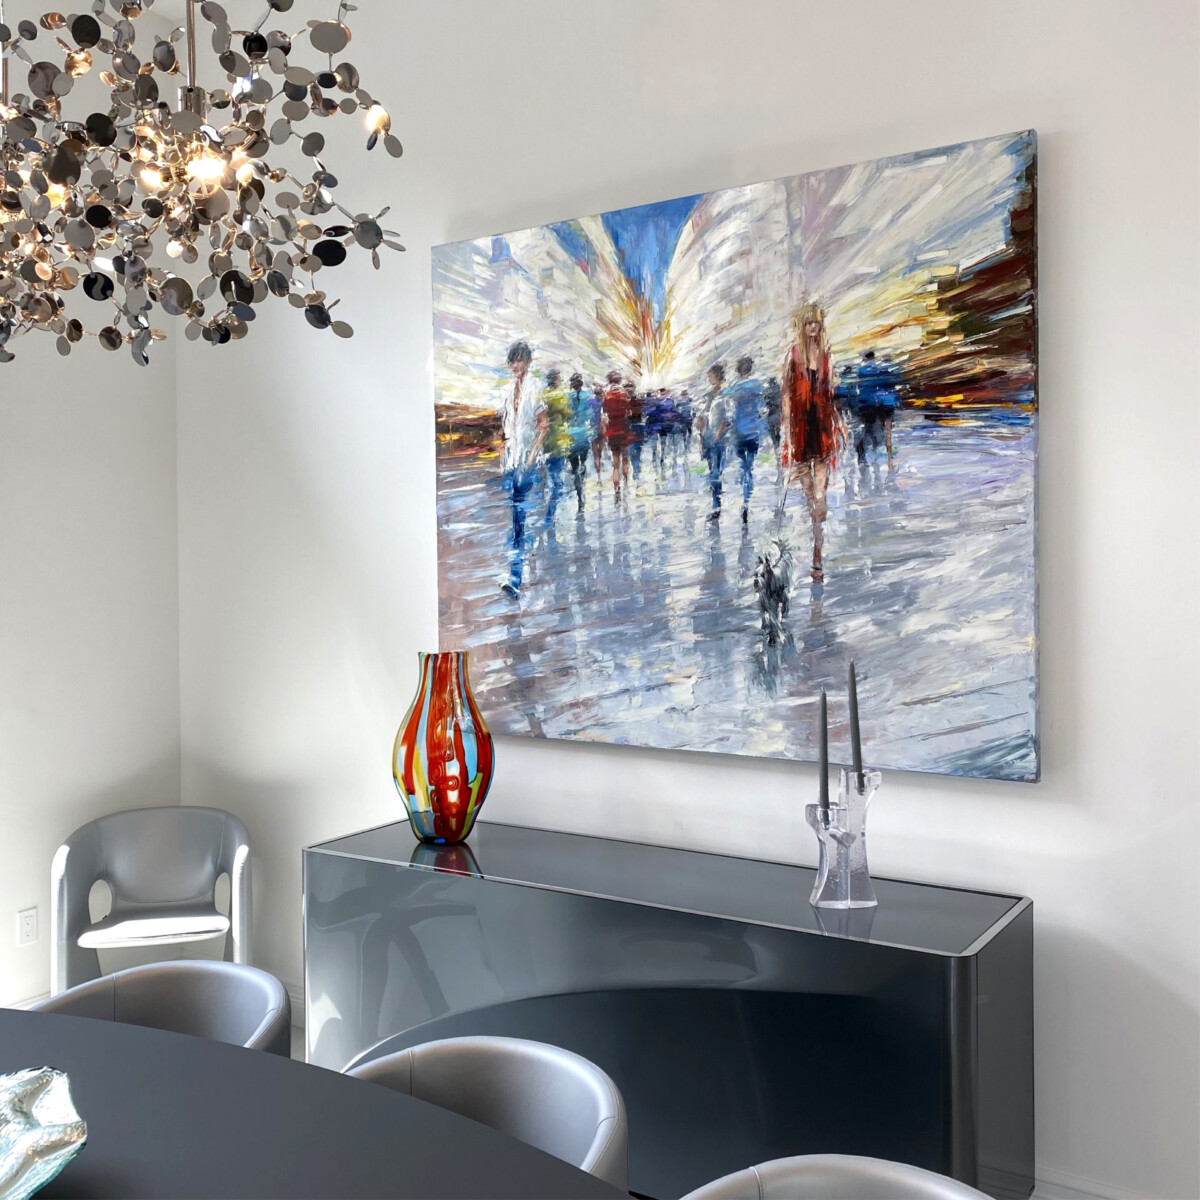 Elena Bond's art installed in lounge